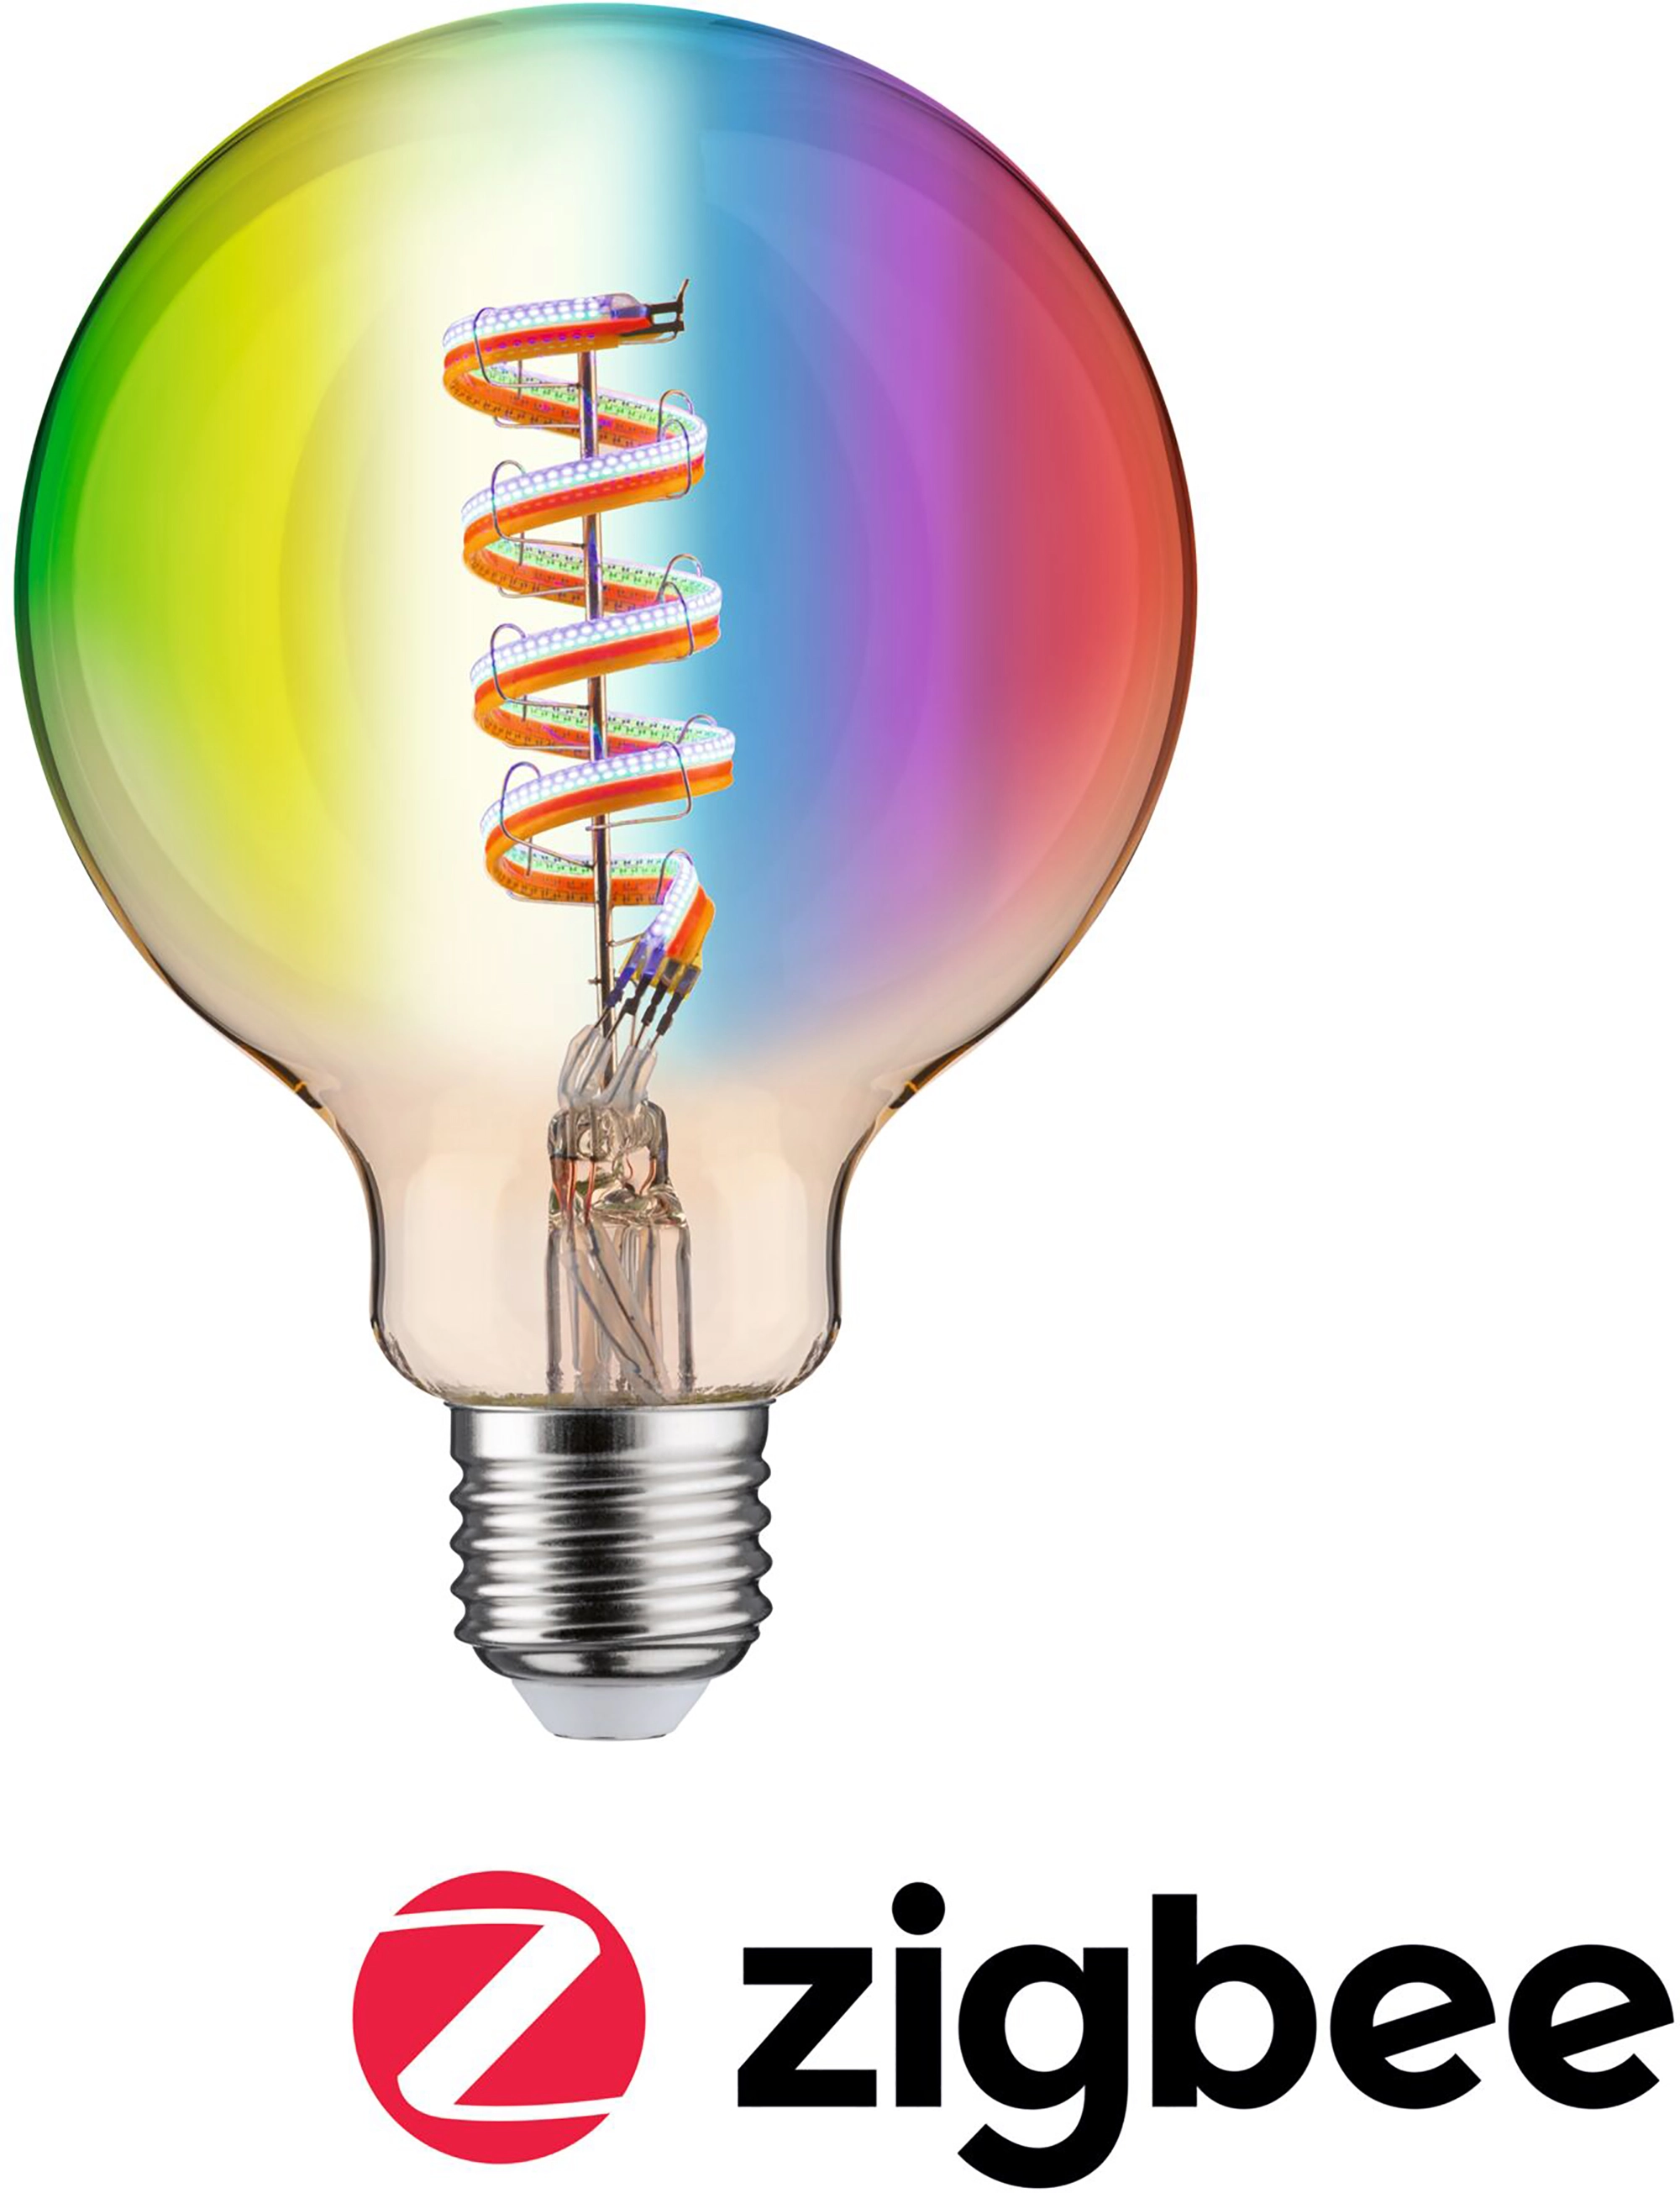 [Dieser Frühling/Herbst ist auch der beliebteste] Paulmann Smart Home Zigbee 3.0 Filament 470 Leuchtmittel bei G95 LED lm OBI kaufen Globe E27